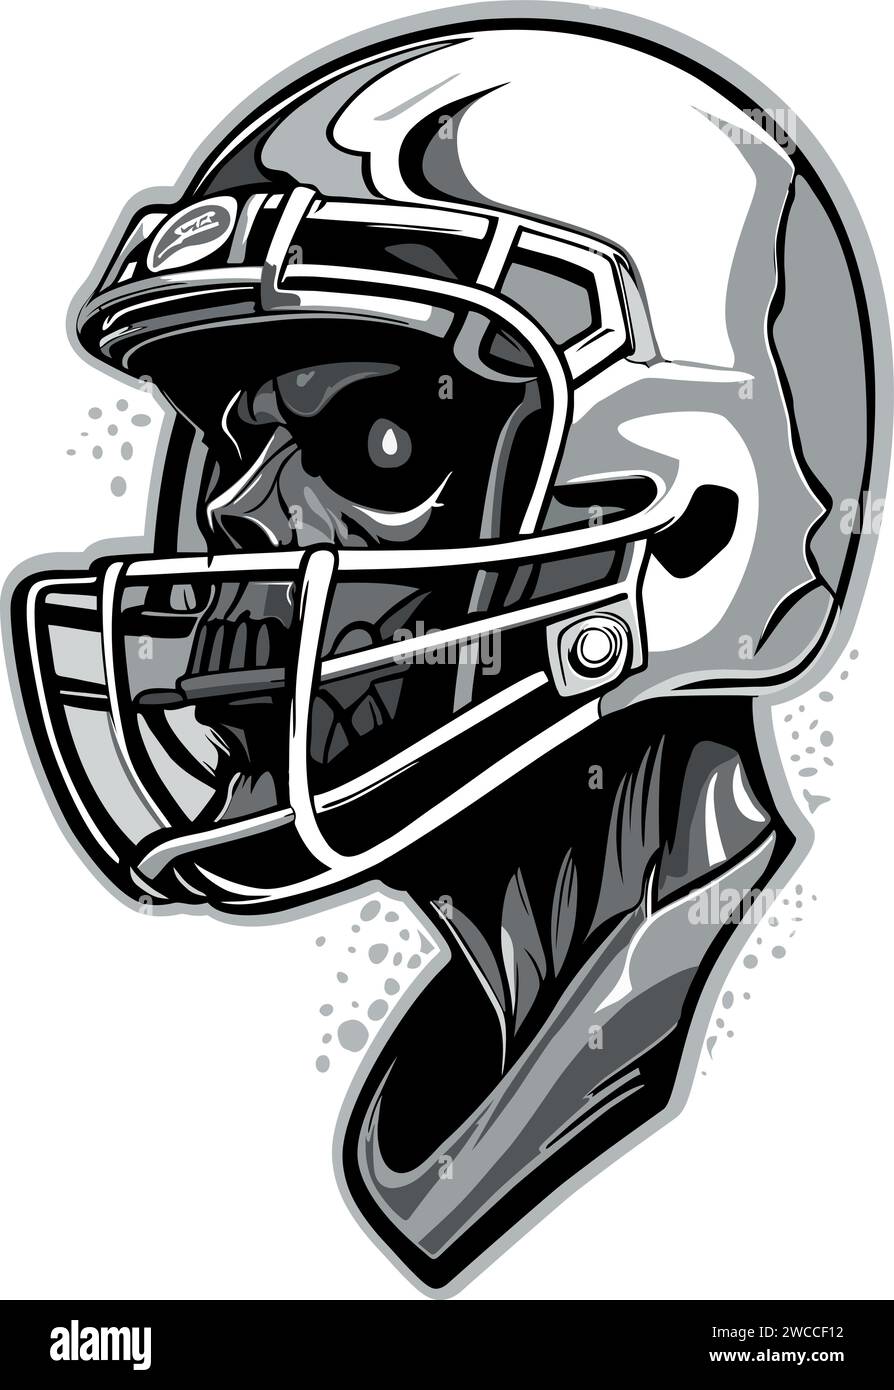 American football player skull face with helmet monochrome. Stock Vector